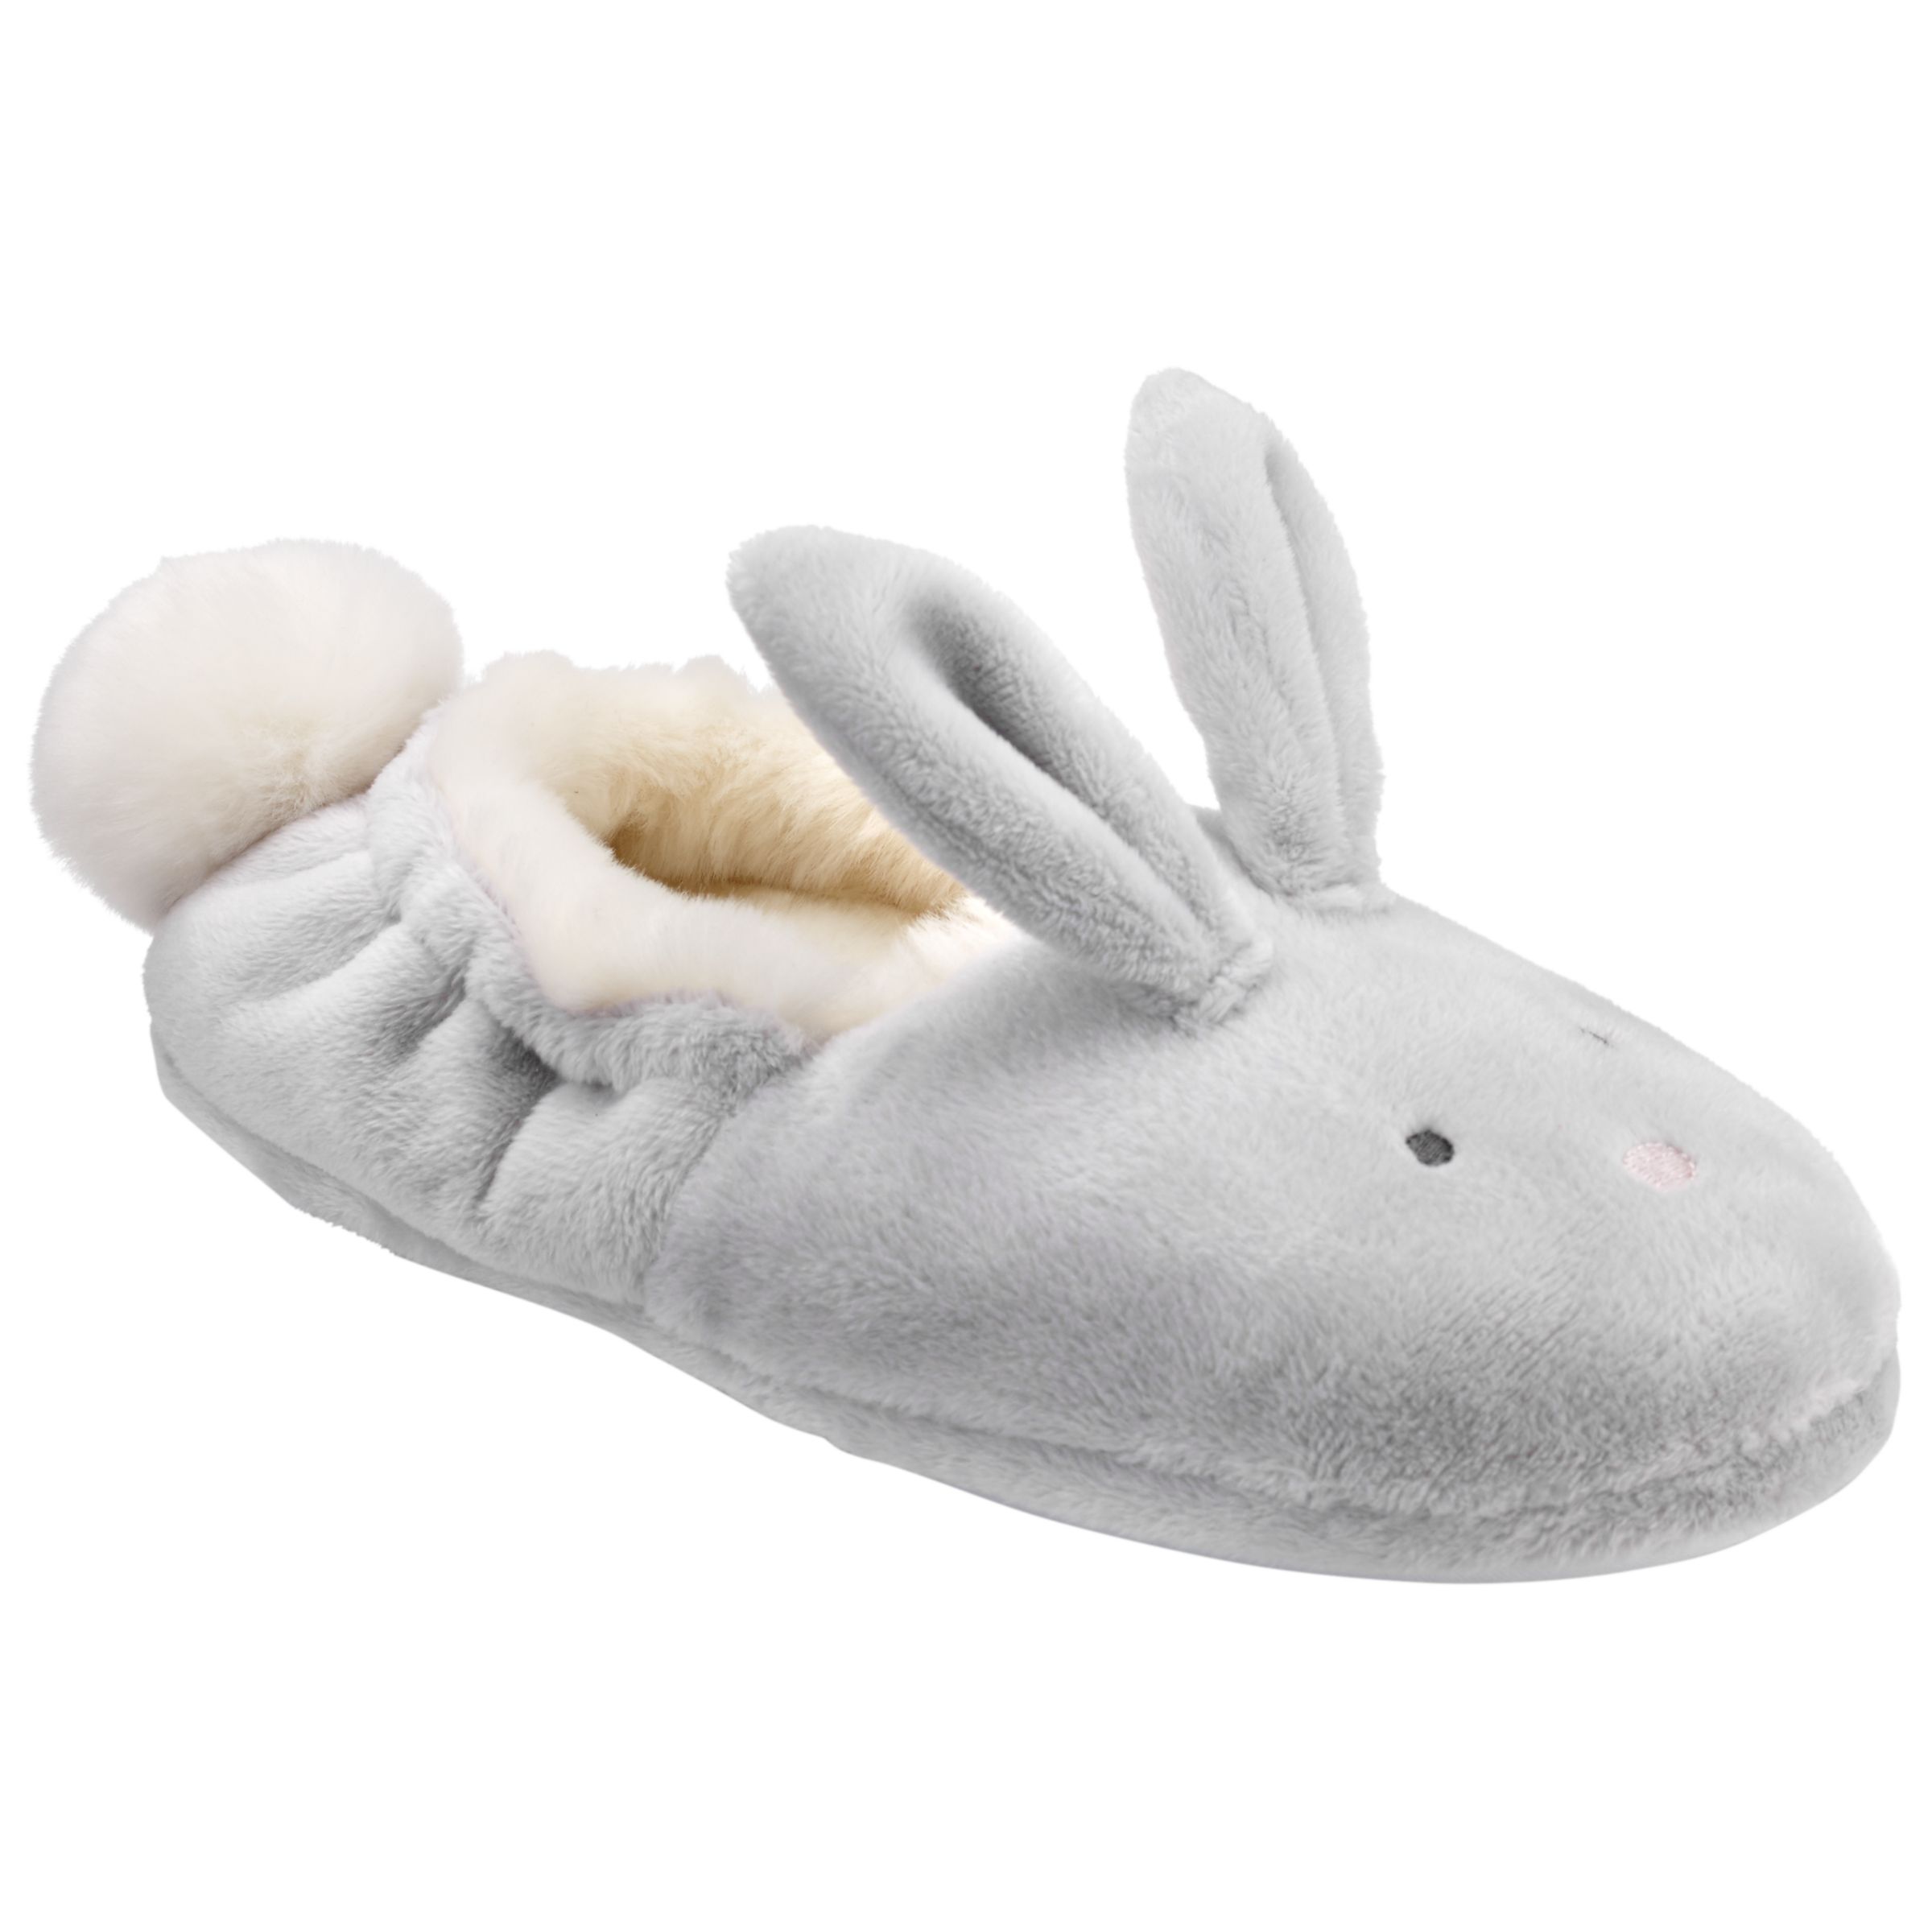 John Lewis & Partners Children's Closed Back Bunny Slippers, Grey, 8 Jnr